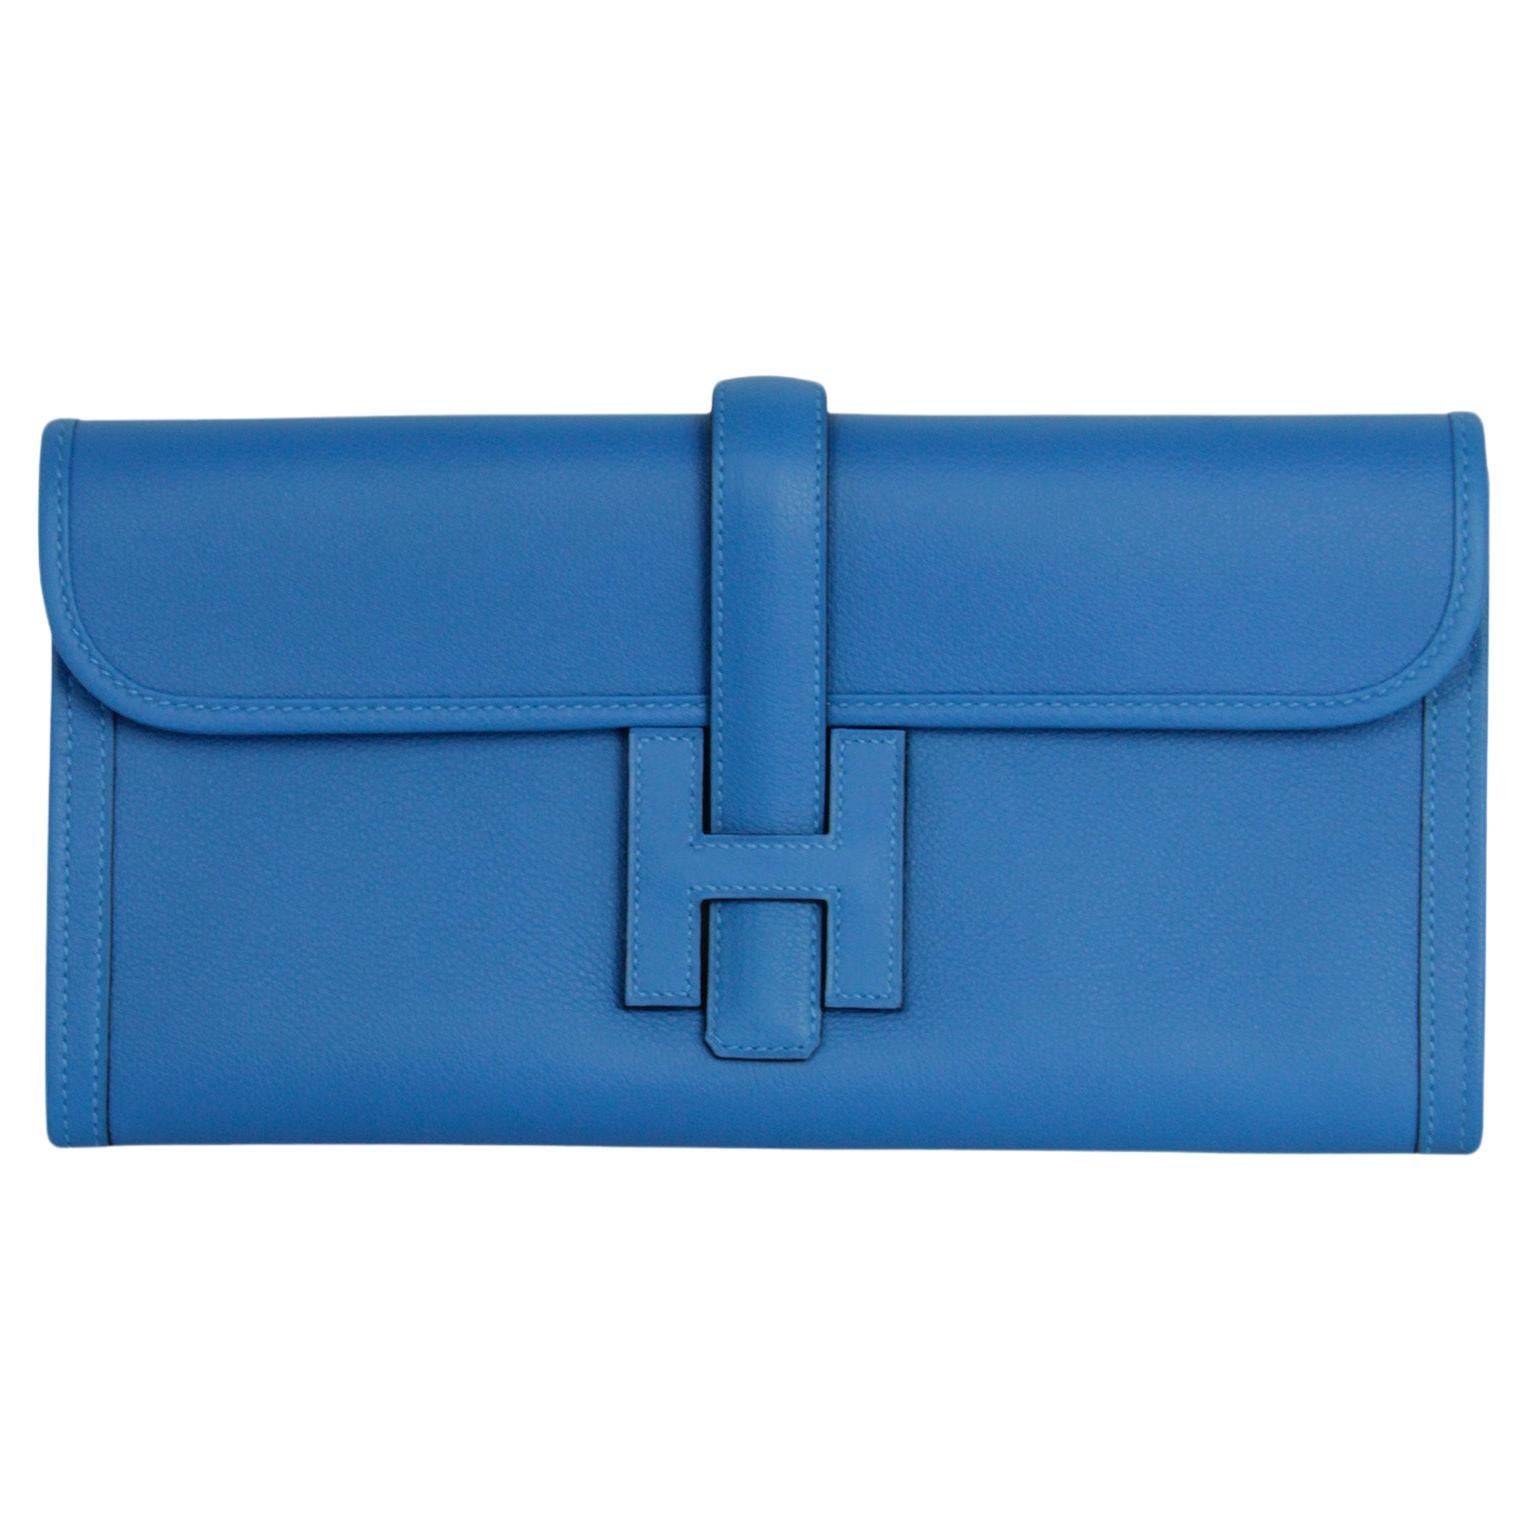 Hermes Bleu Frida Blue Swift Leather H Jige Elan Clutch Bag